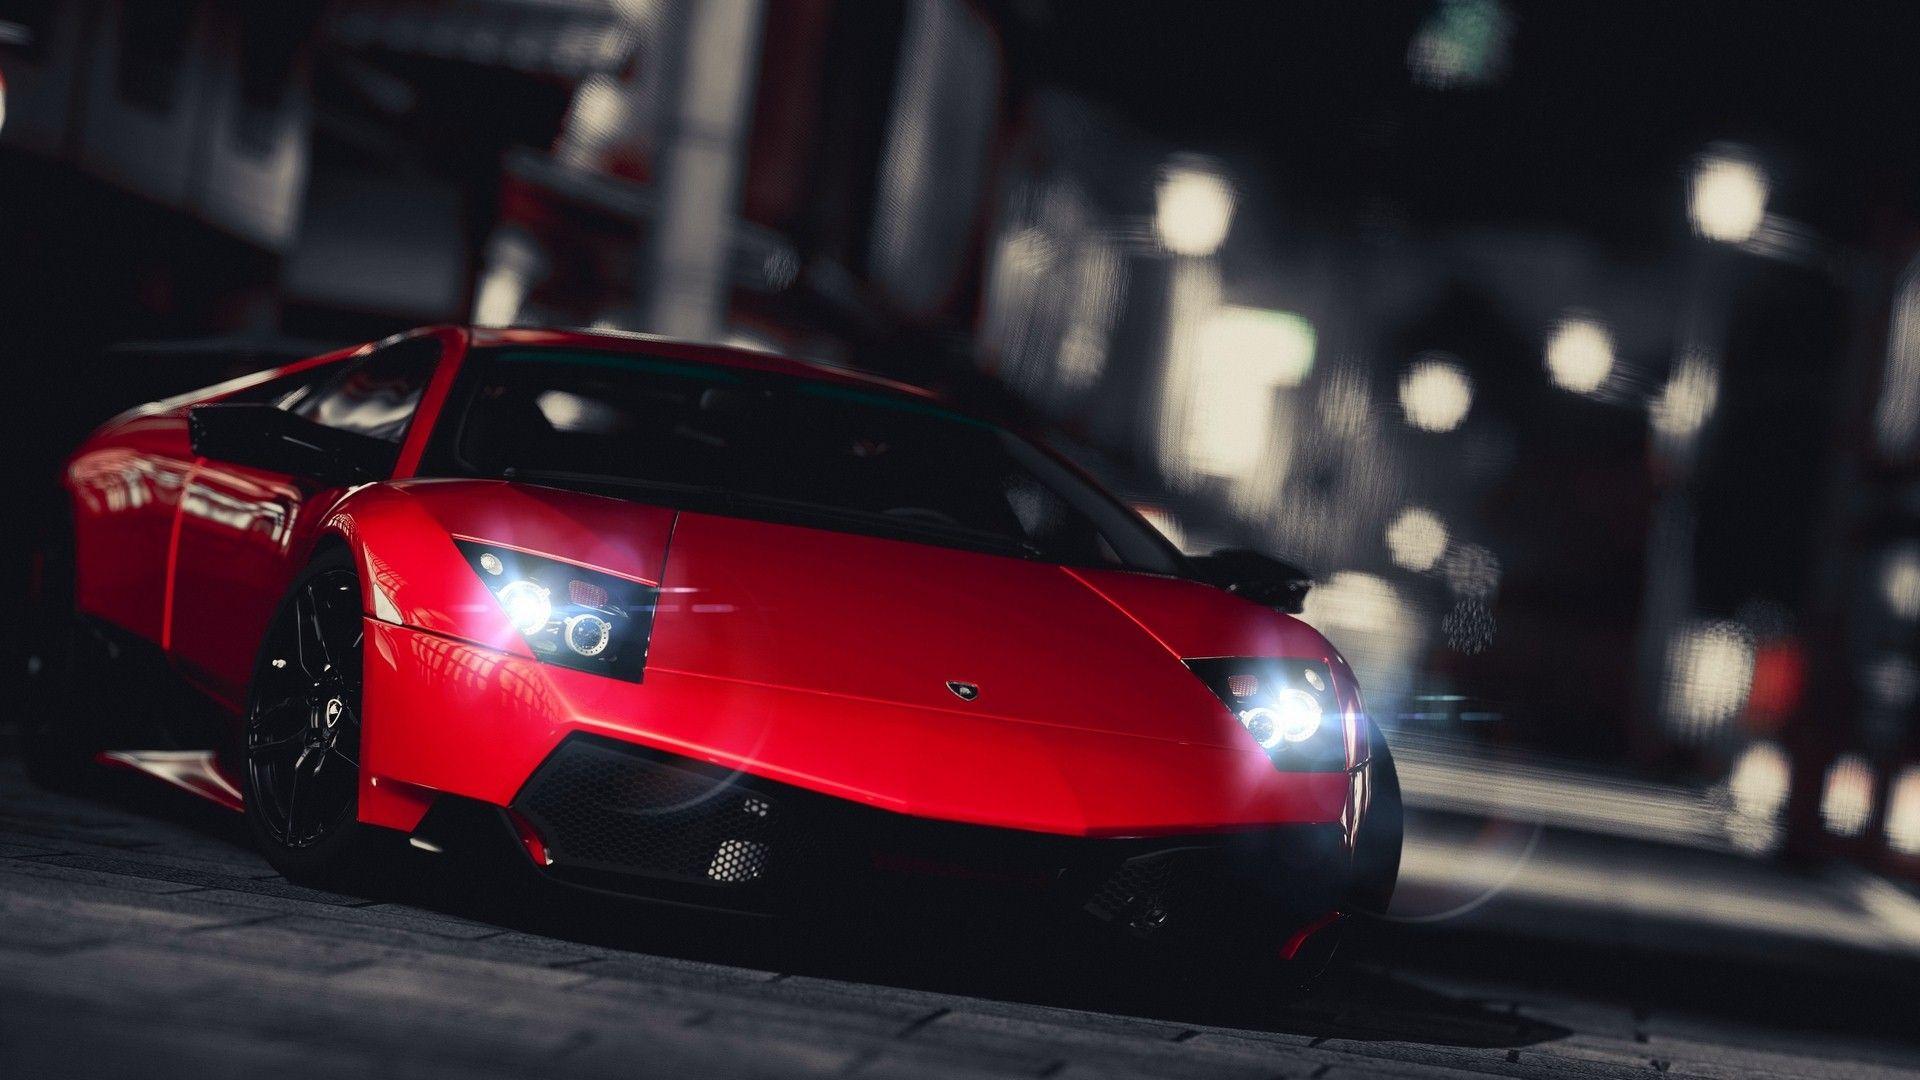 Red Lamborghini Gallardo Super Pic on Night